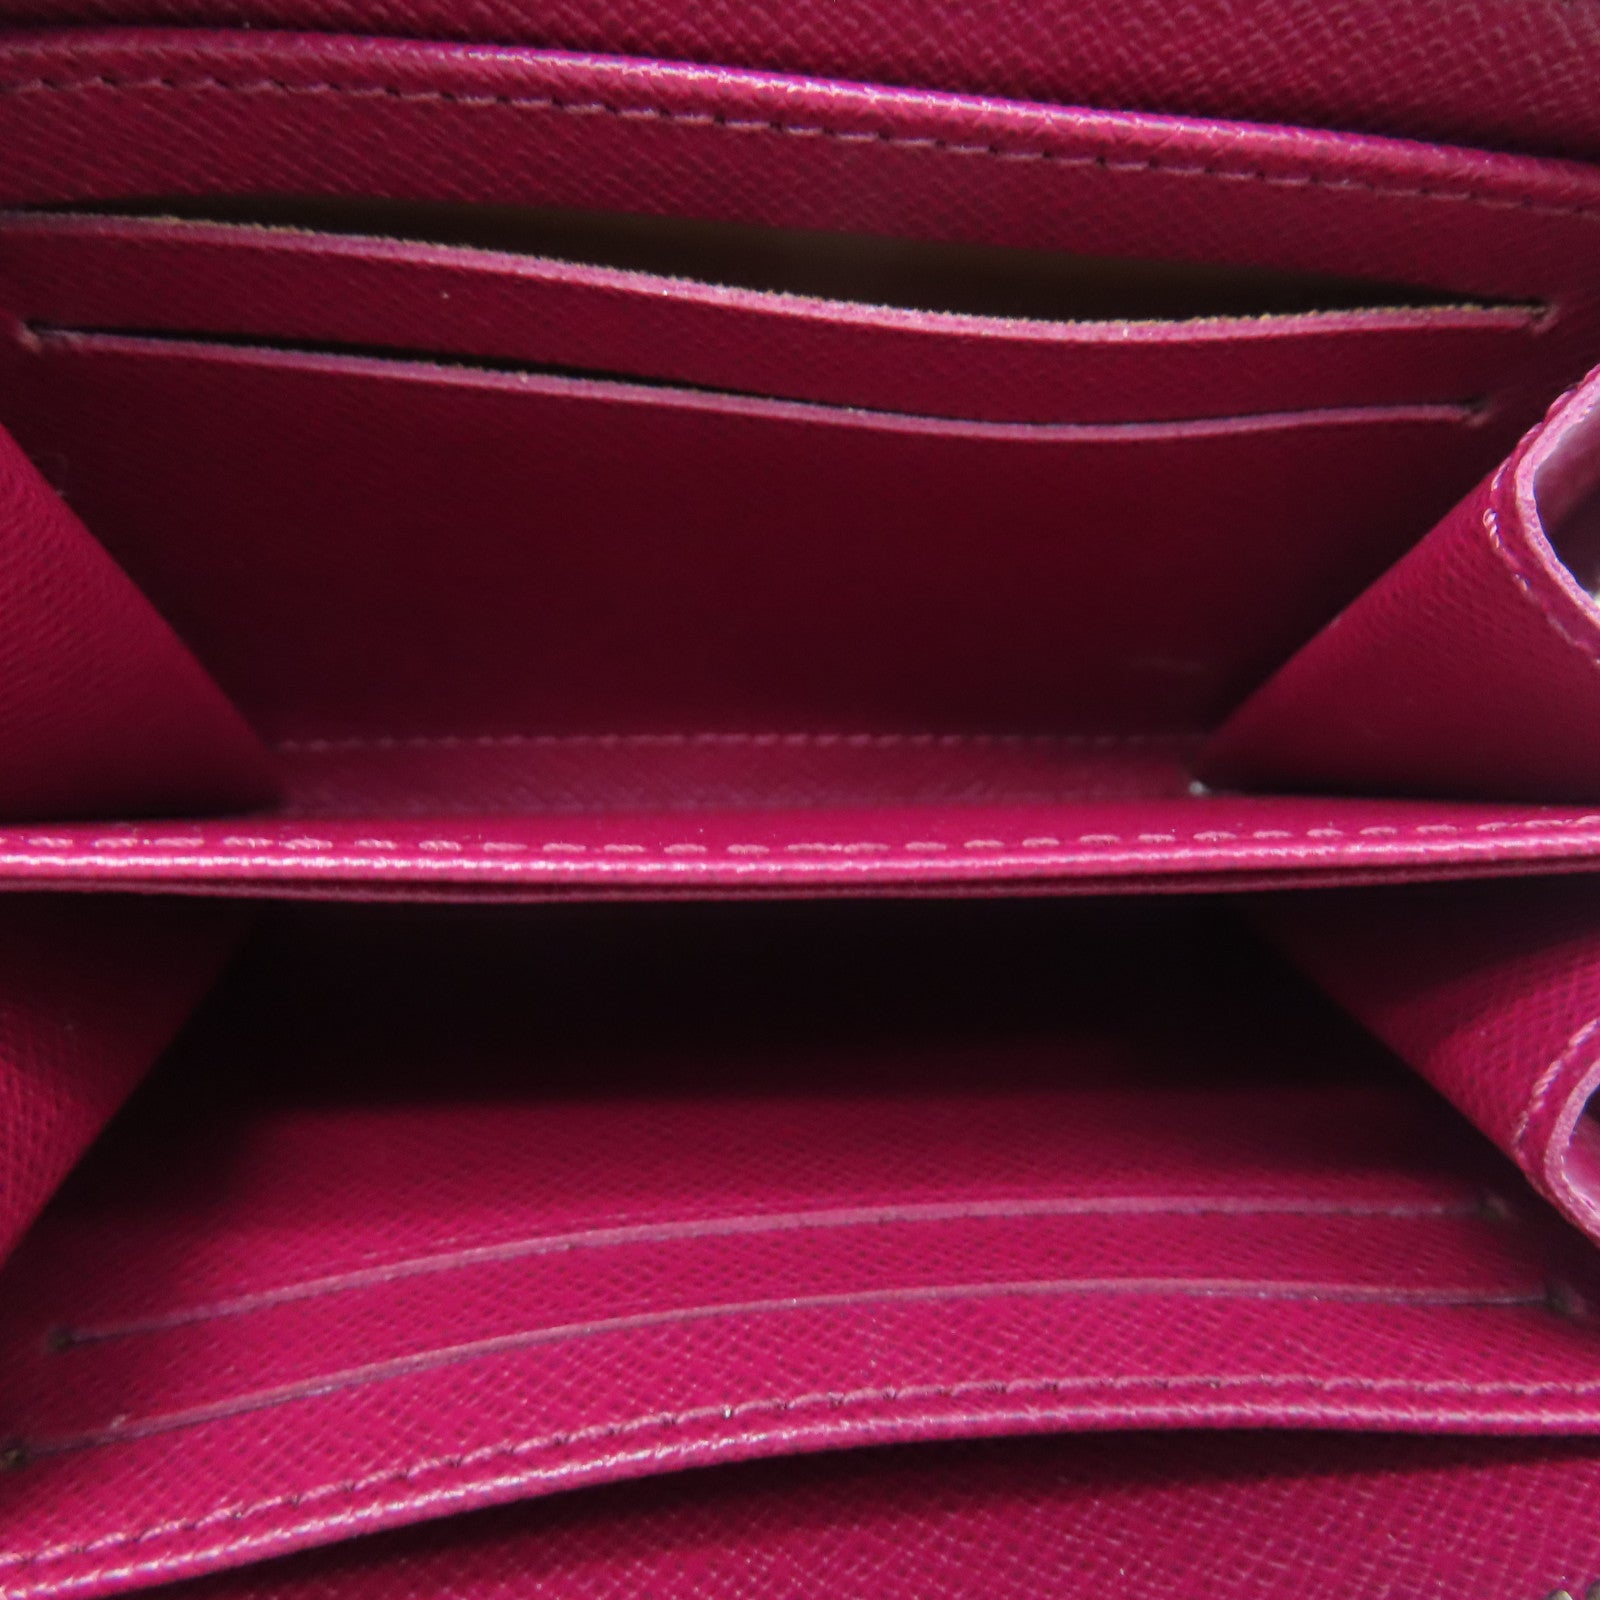 LOUIS VUITTON Epi Leather Zipper Wallet Silver Buckle Card Holder Red –  Brand Off Hong Kong Online Store